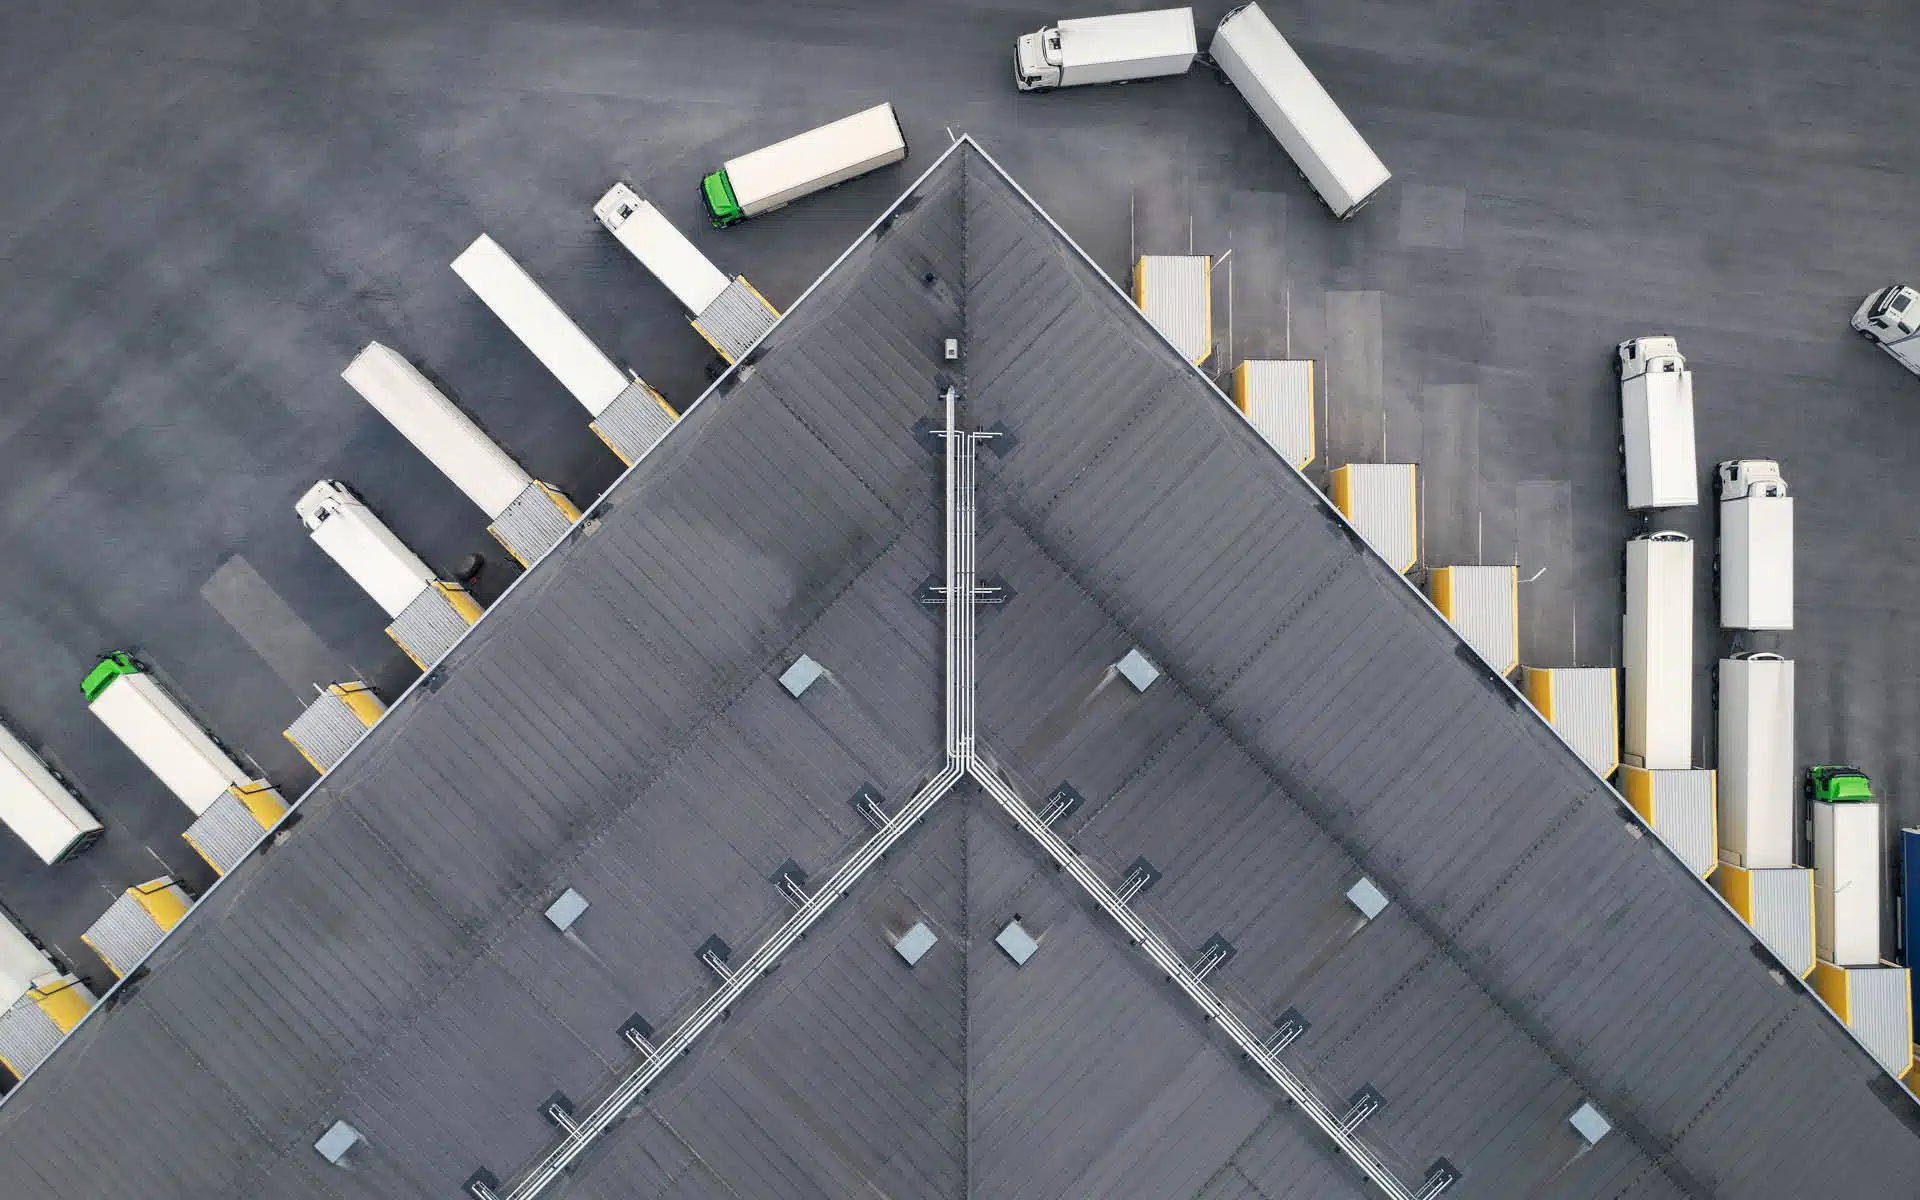 An overhead view of a semi truck terminal